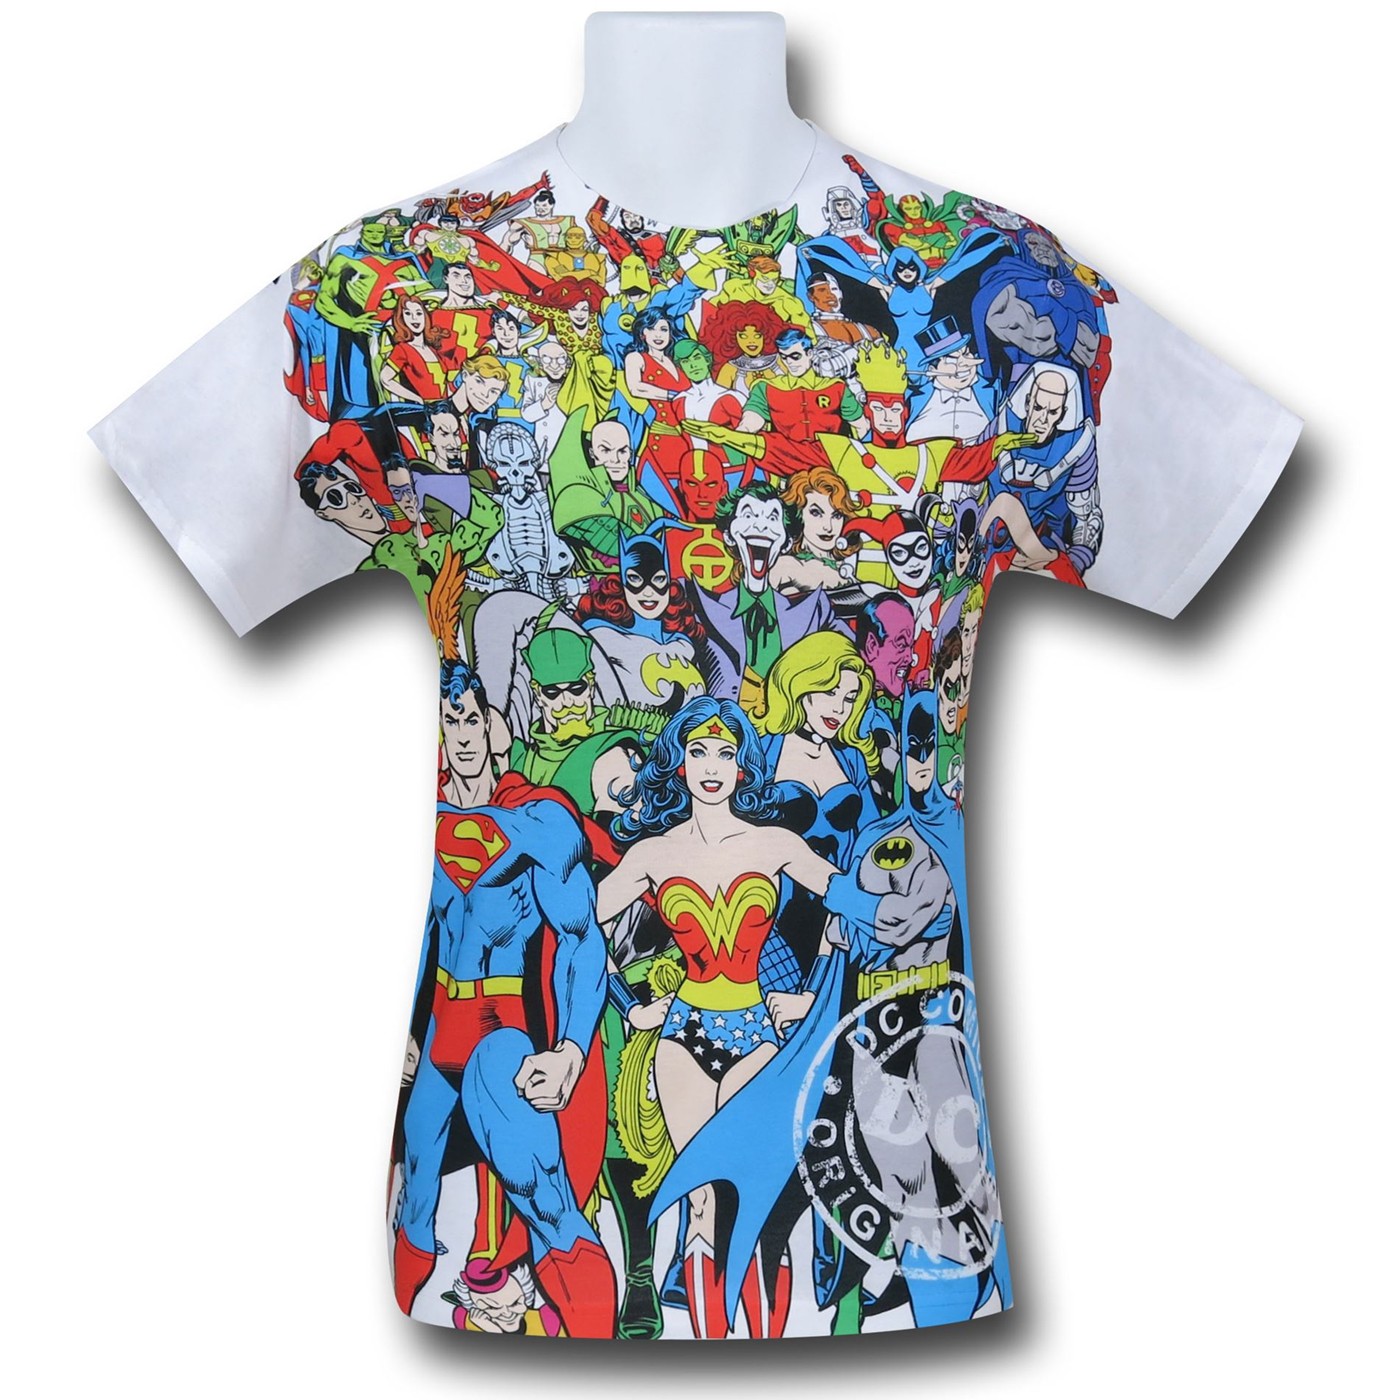 DC Originals Sublimated Characters T-Shirt